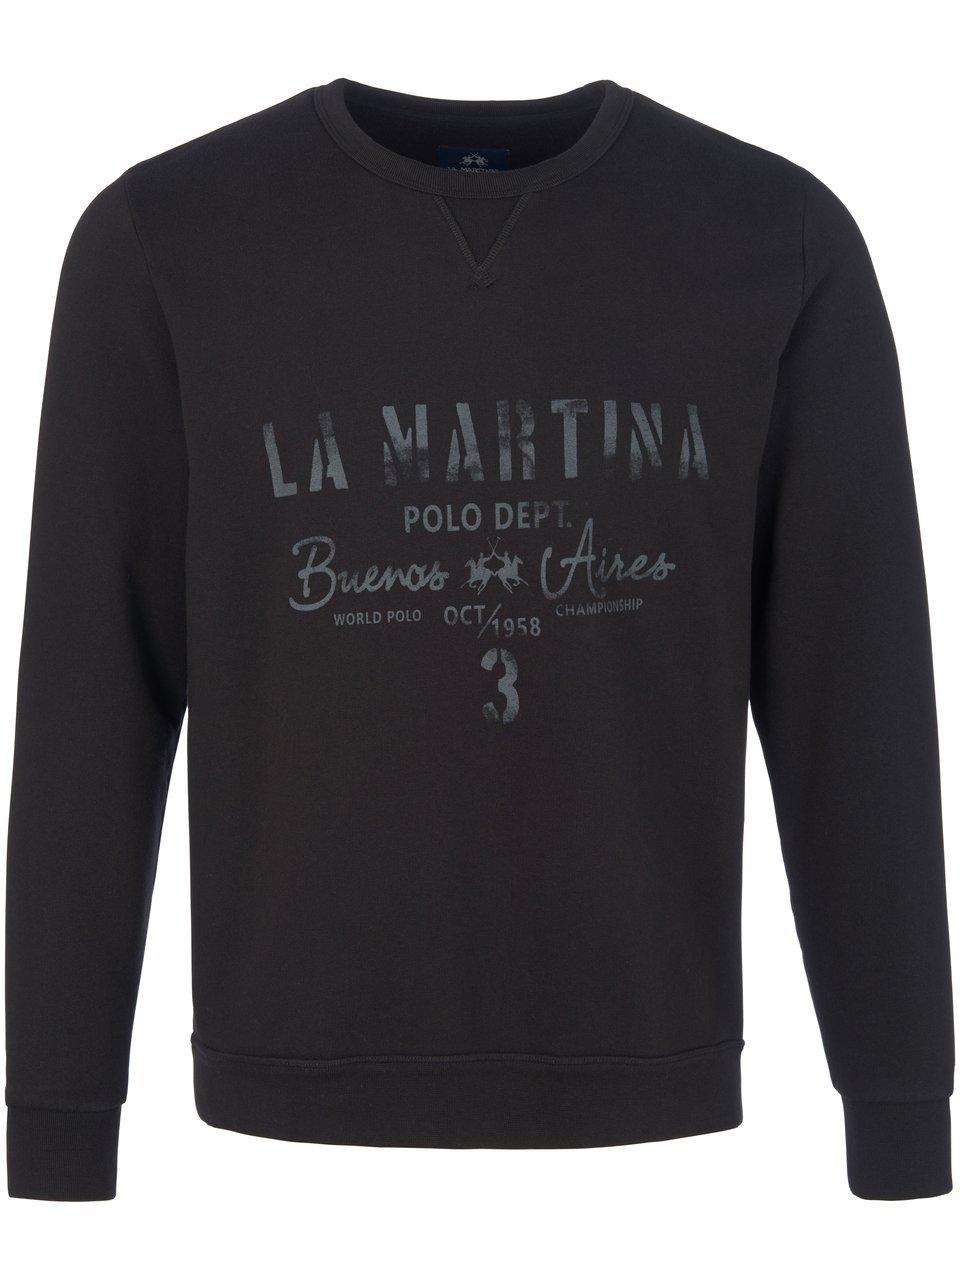 La Martina - Le sweat-shirt